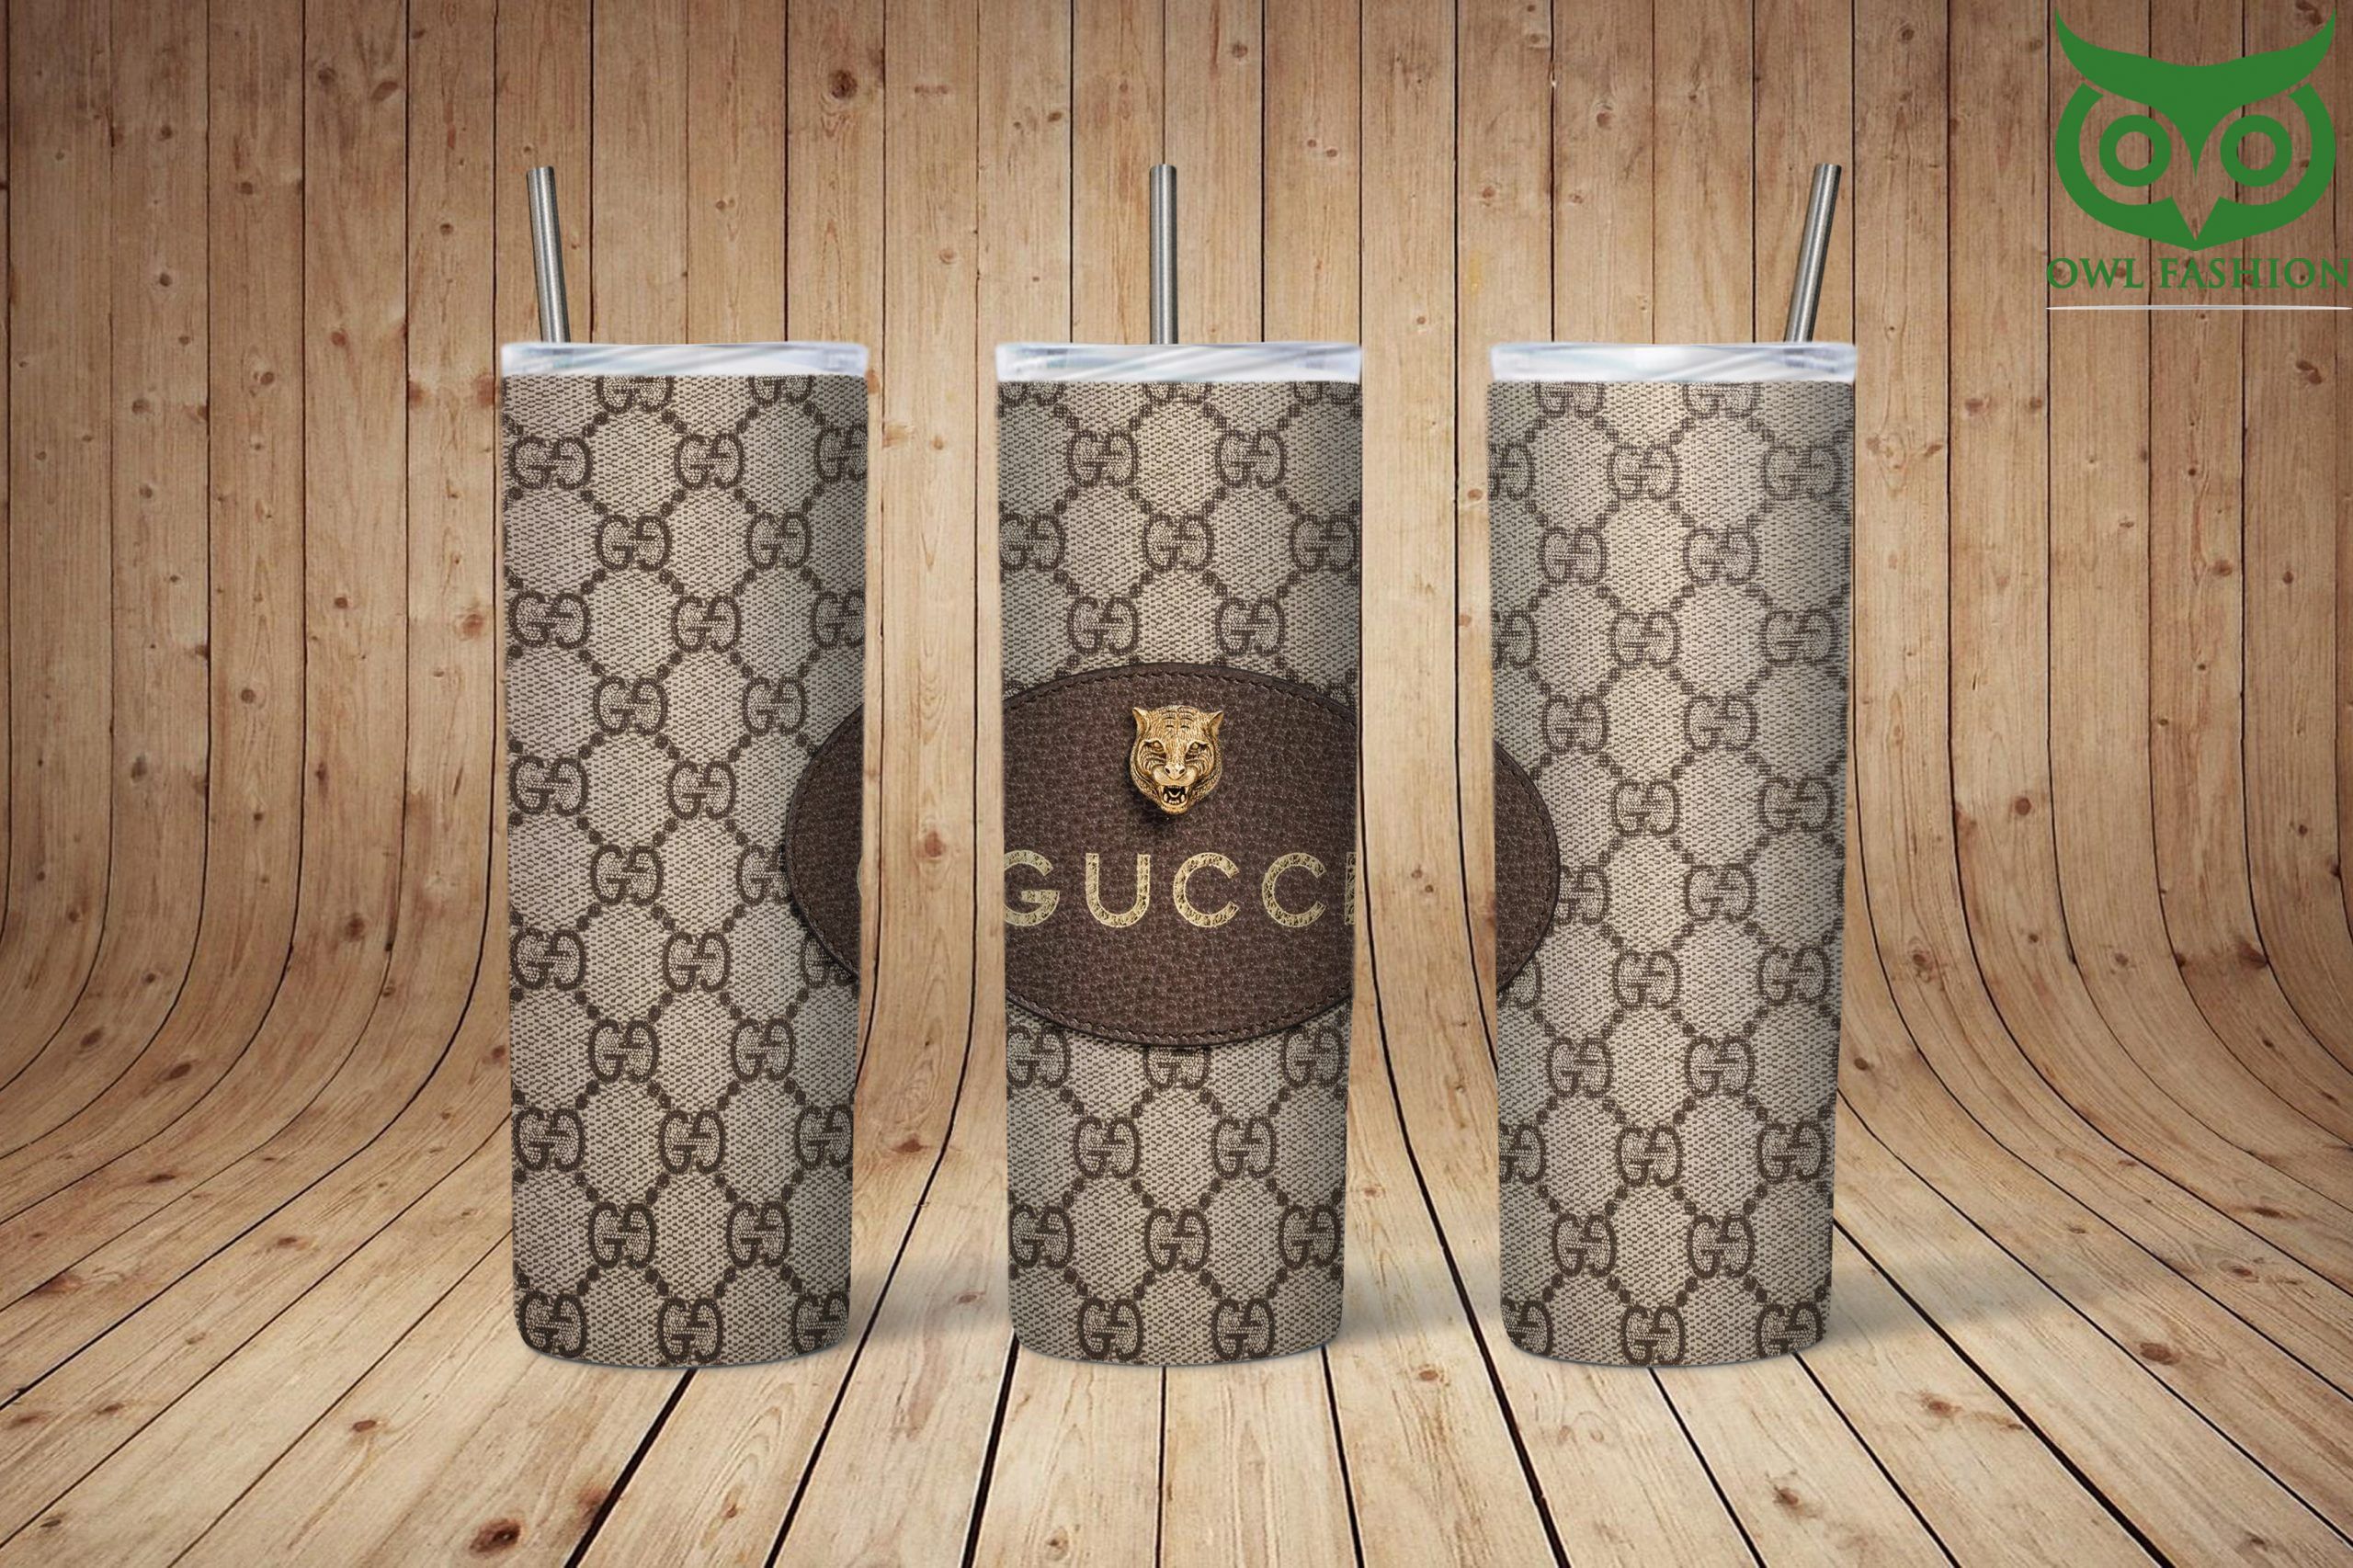 80 Gucci fashion golden tiger logo skinny tumbler cup